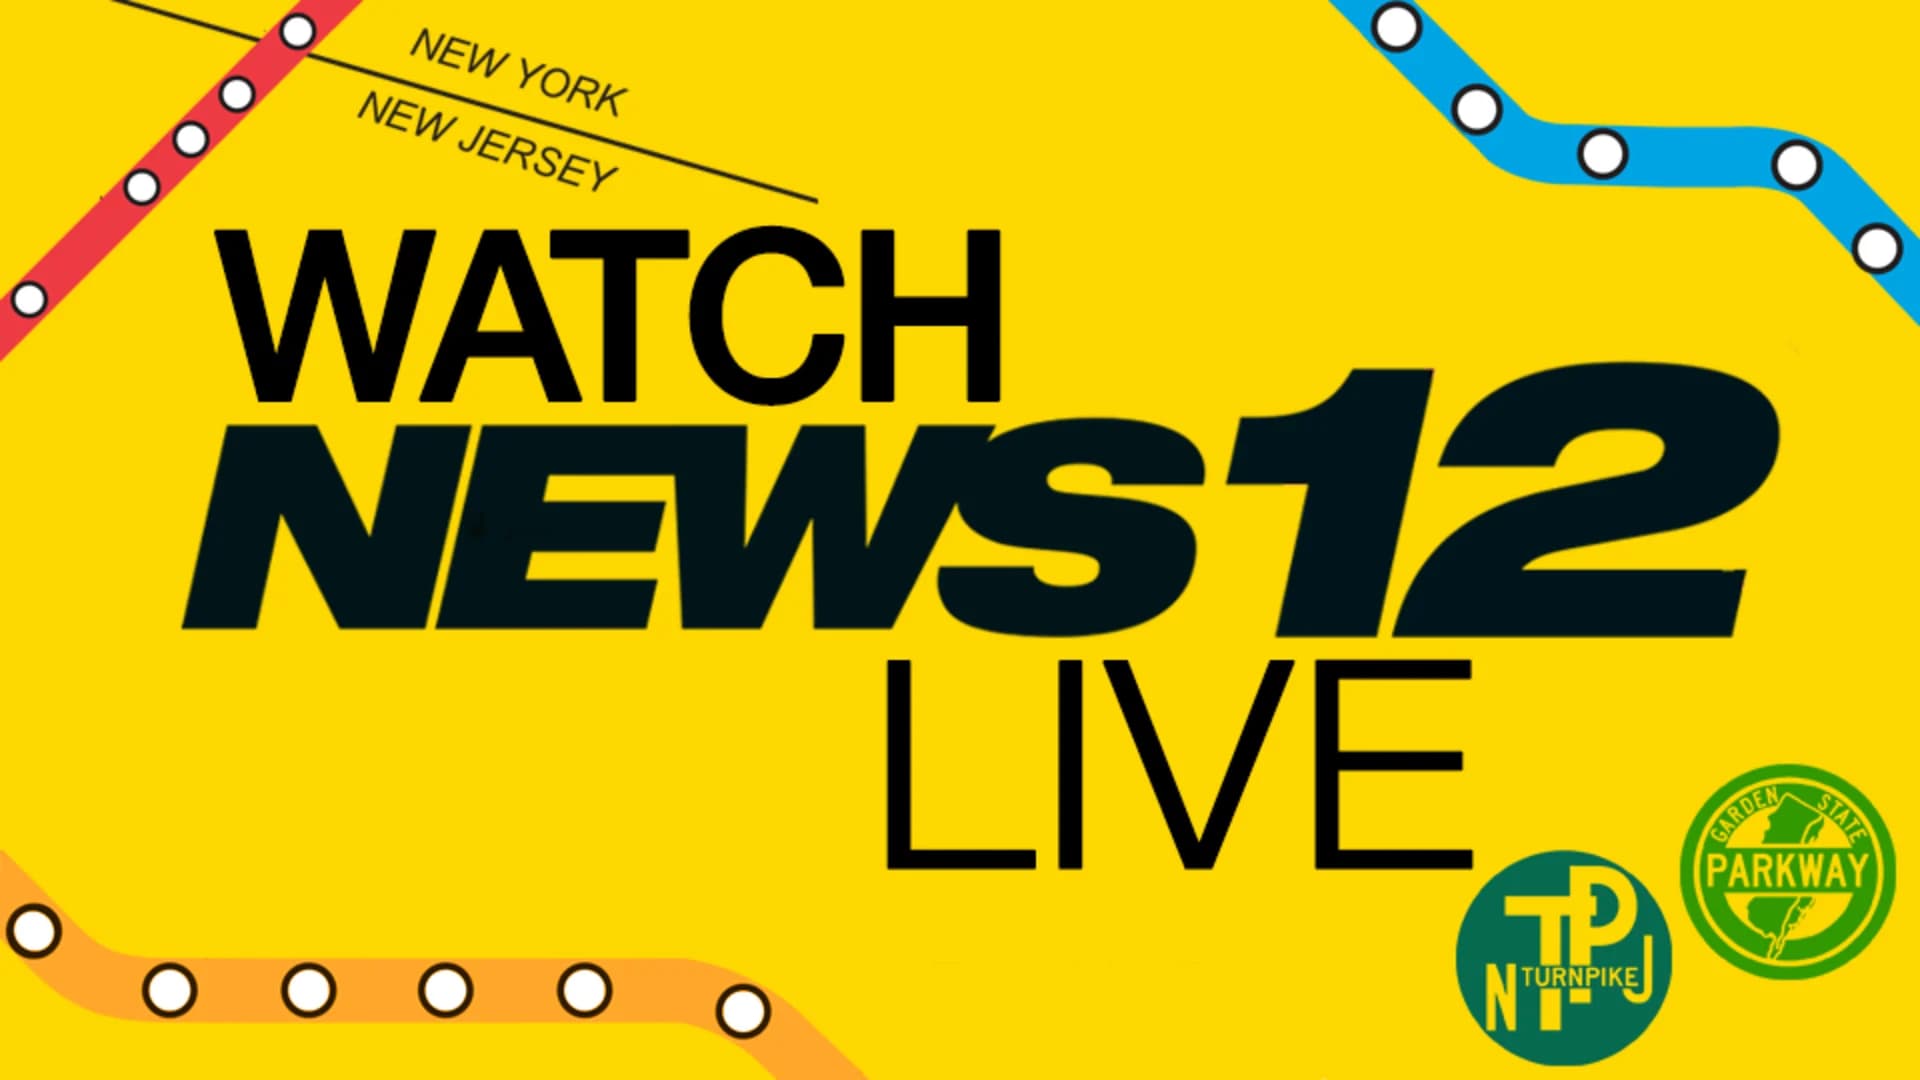 WATCH NEWS 12 LIVE